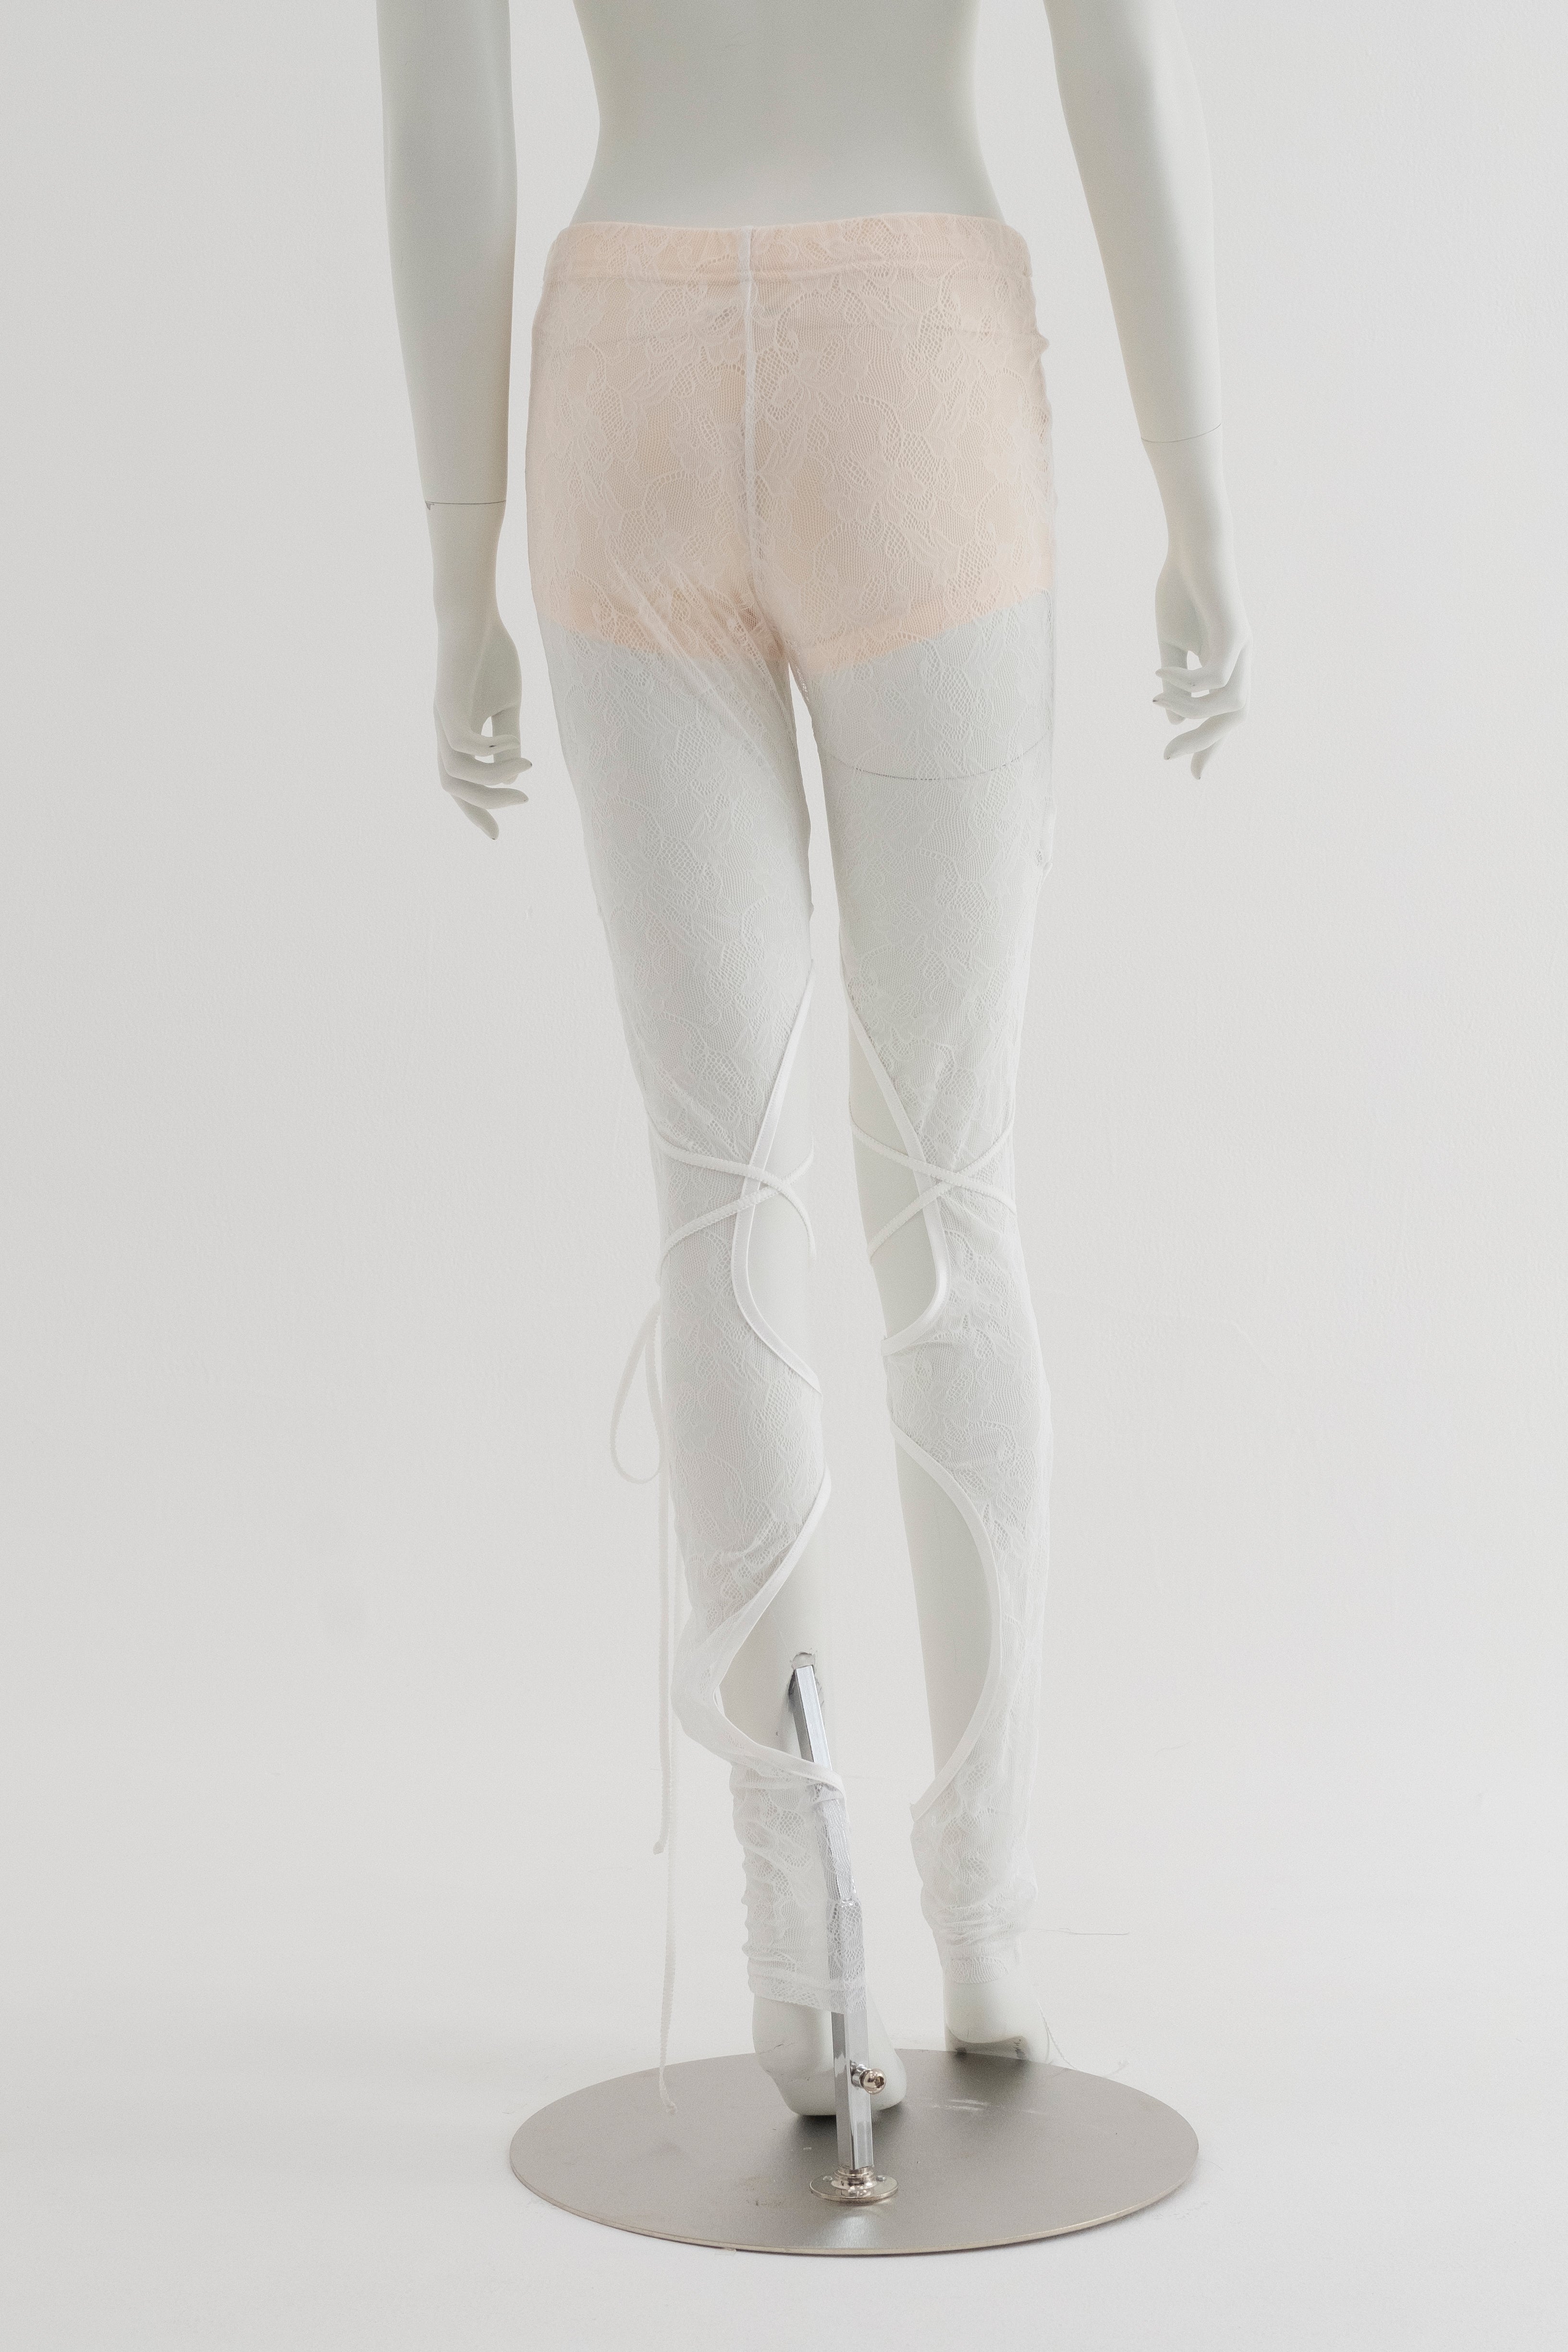 AKIKOAOKI(アキコアオキ)のlinge leggings-long-01 WHITEの通販 ...